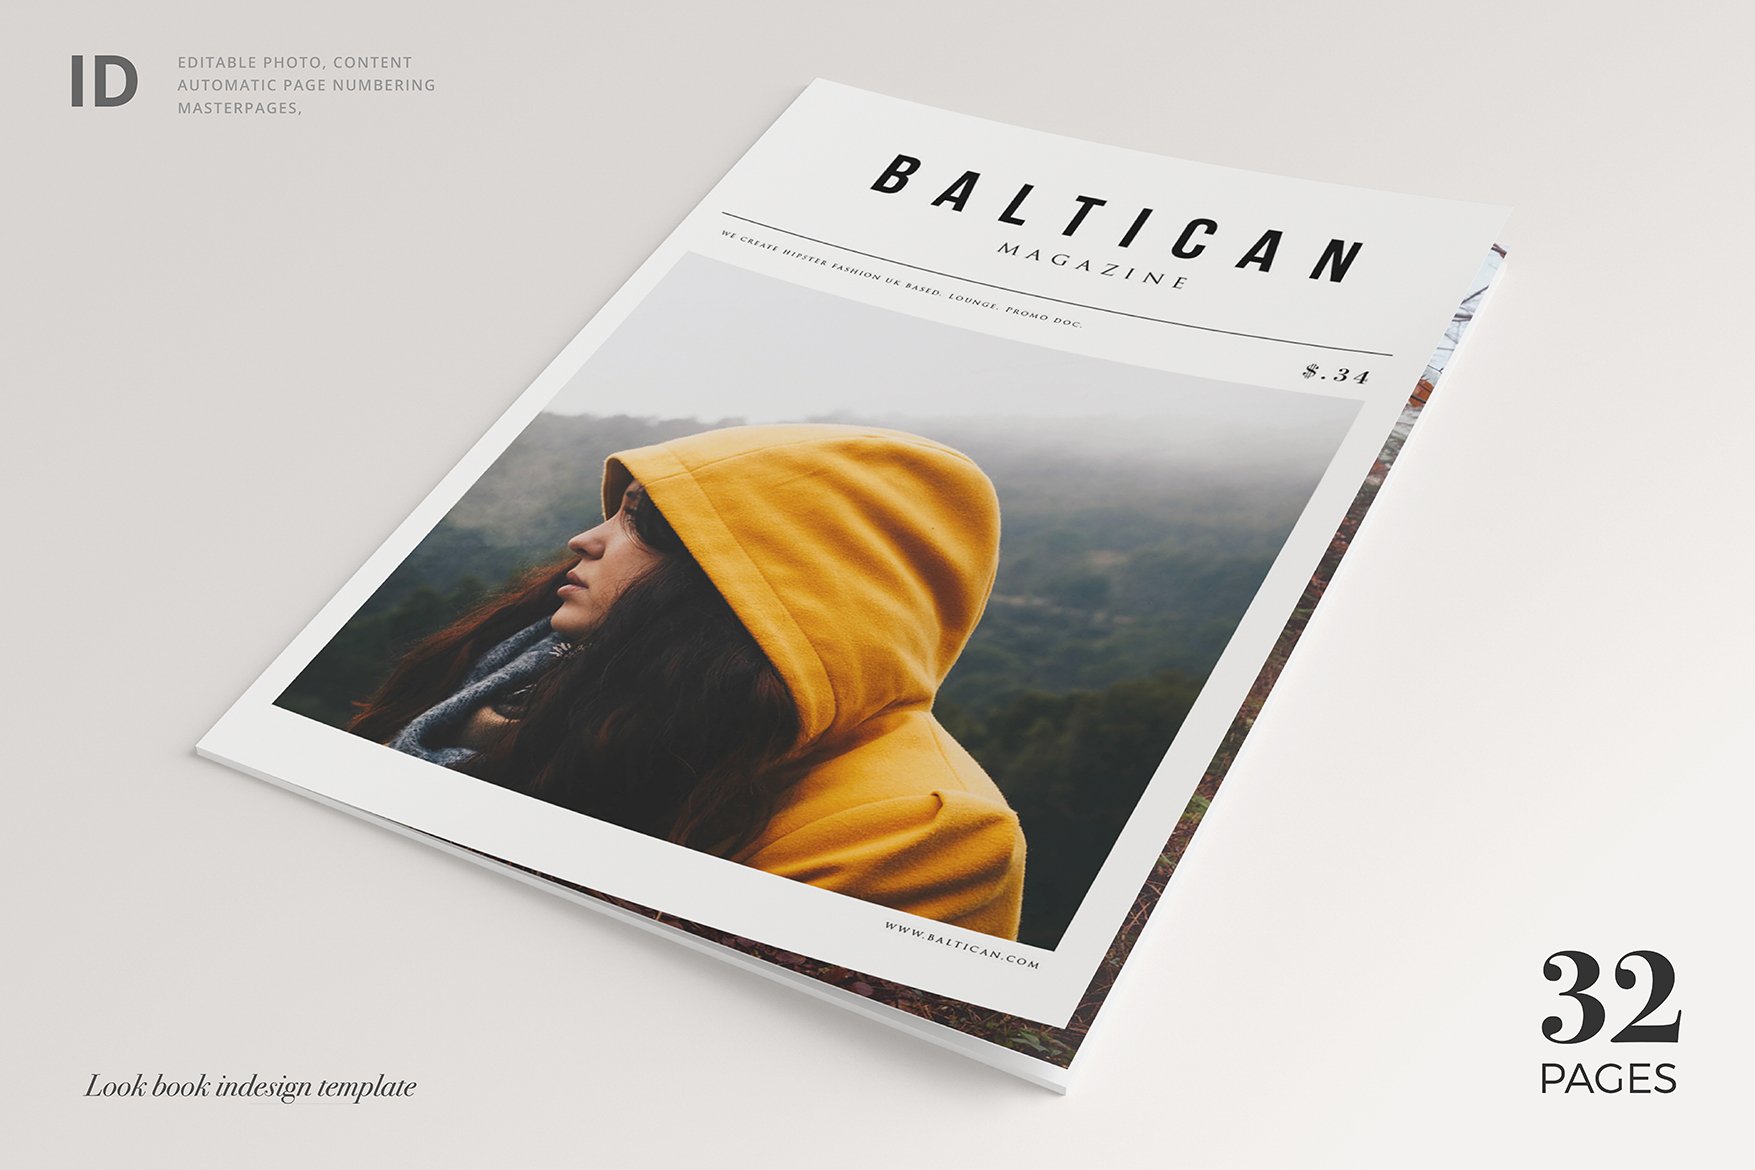 Baltican Fashion Catalog cover image.